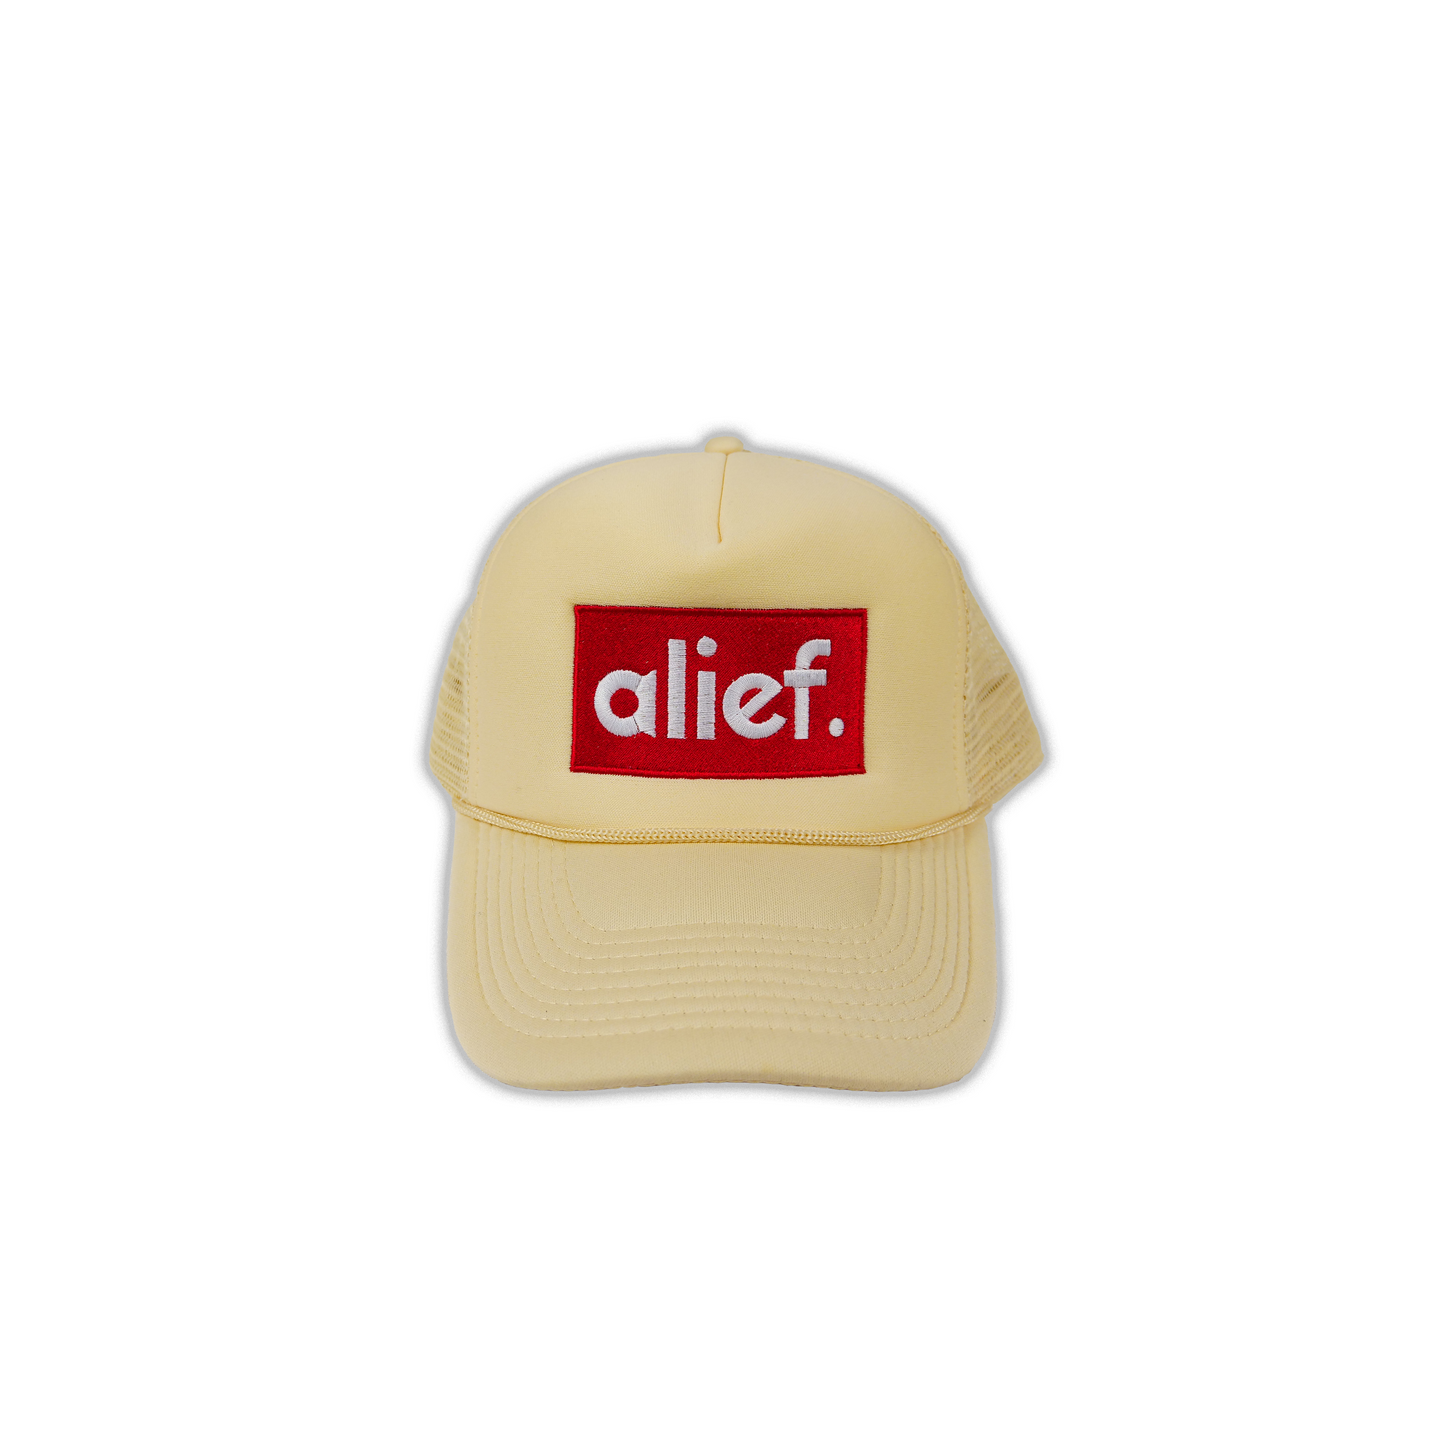 Alief Red Box Trucker Hat - Cream